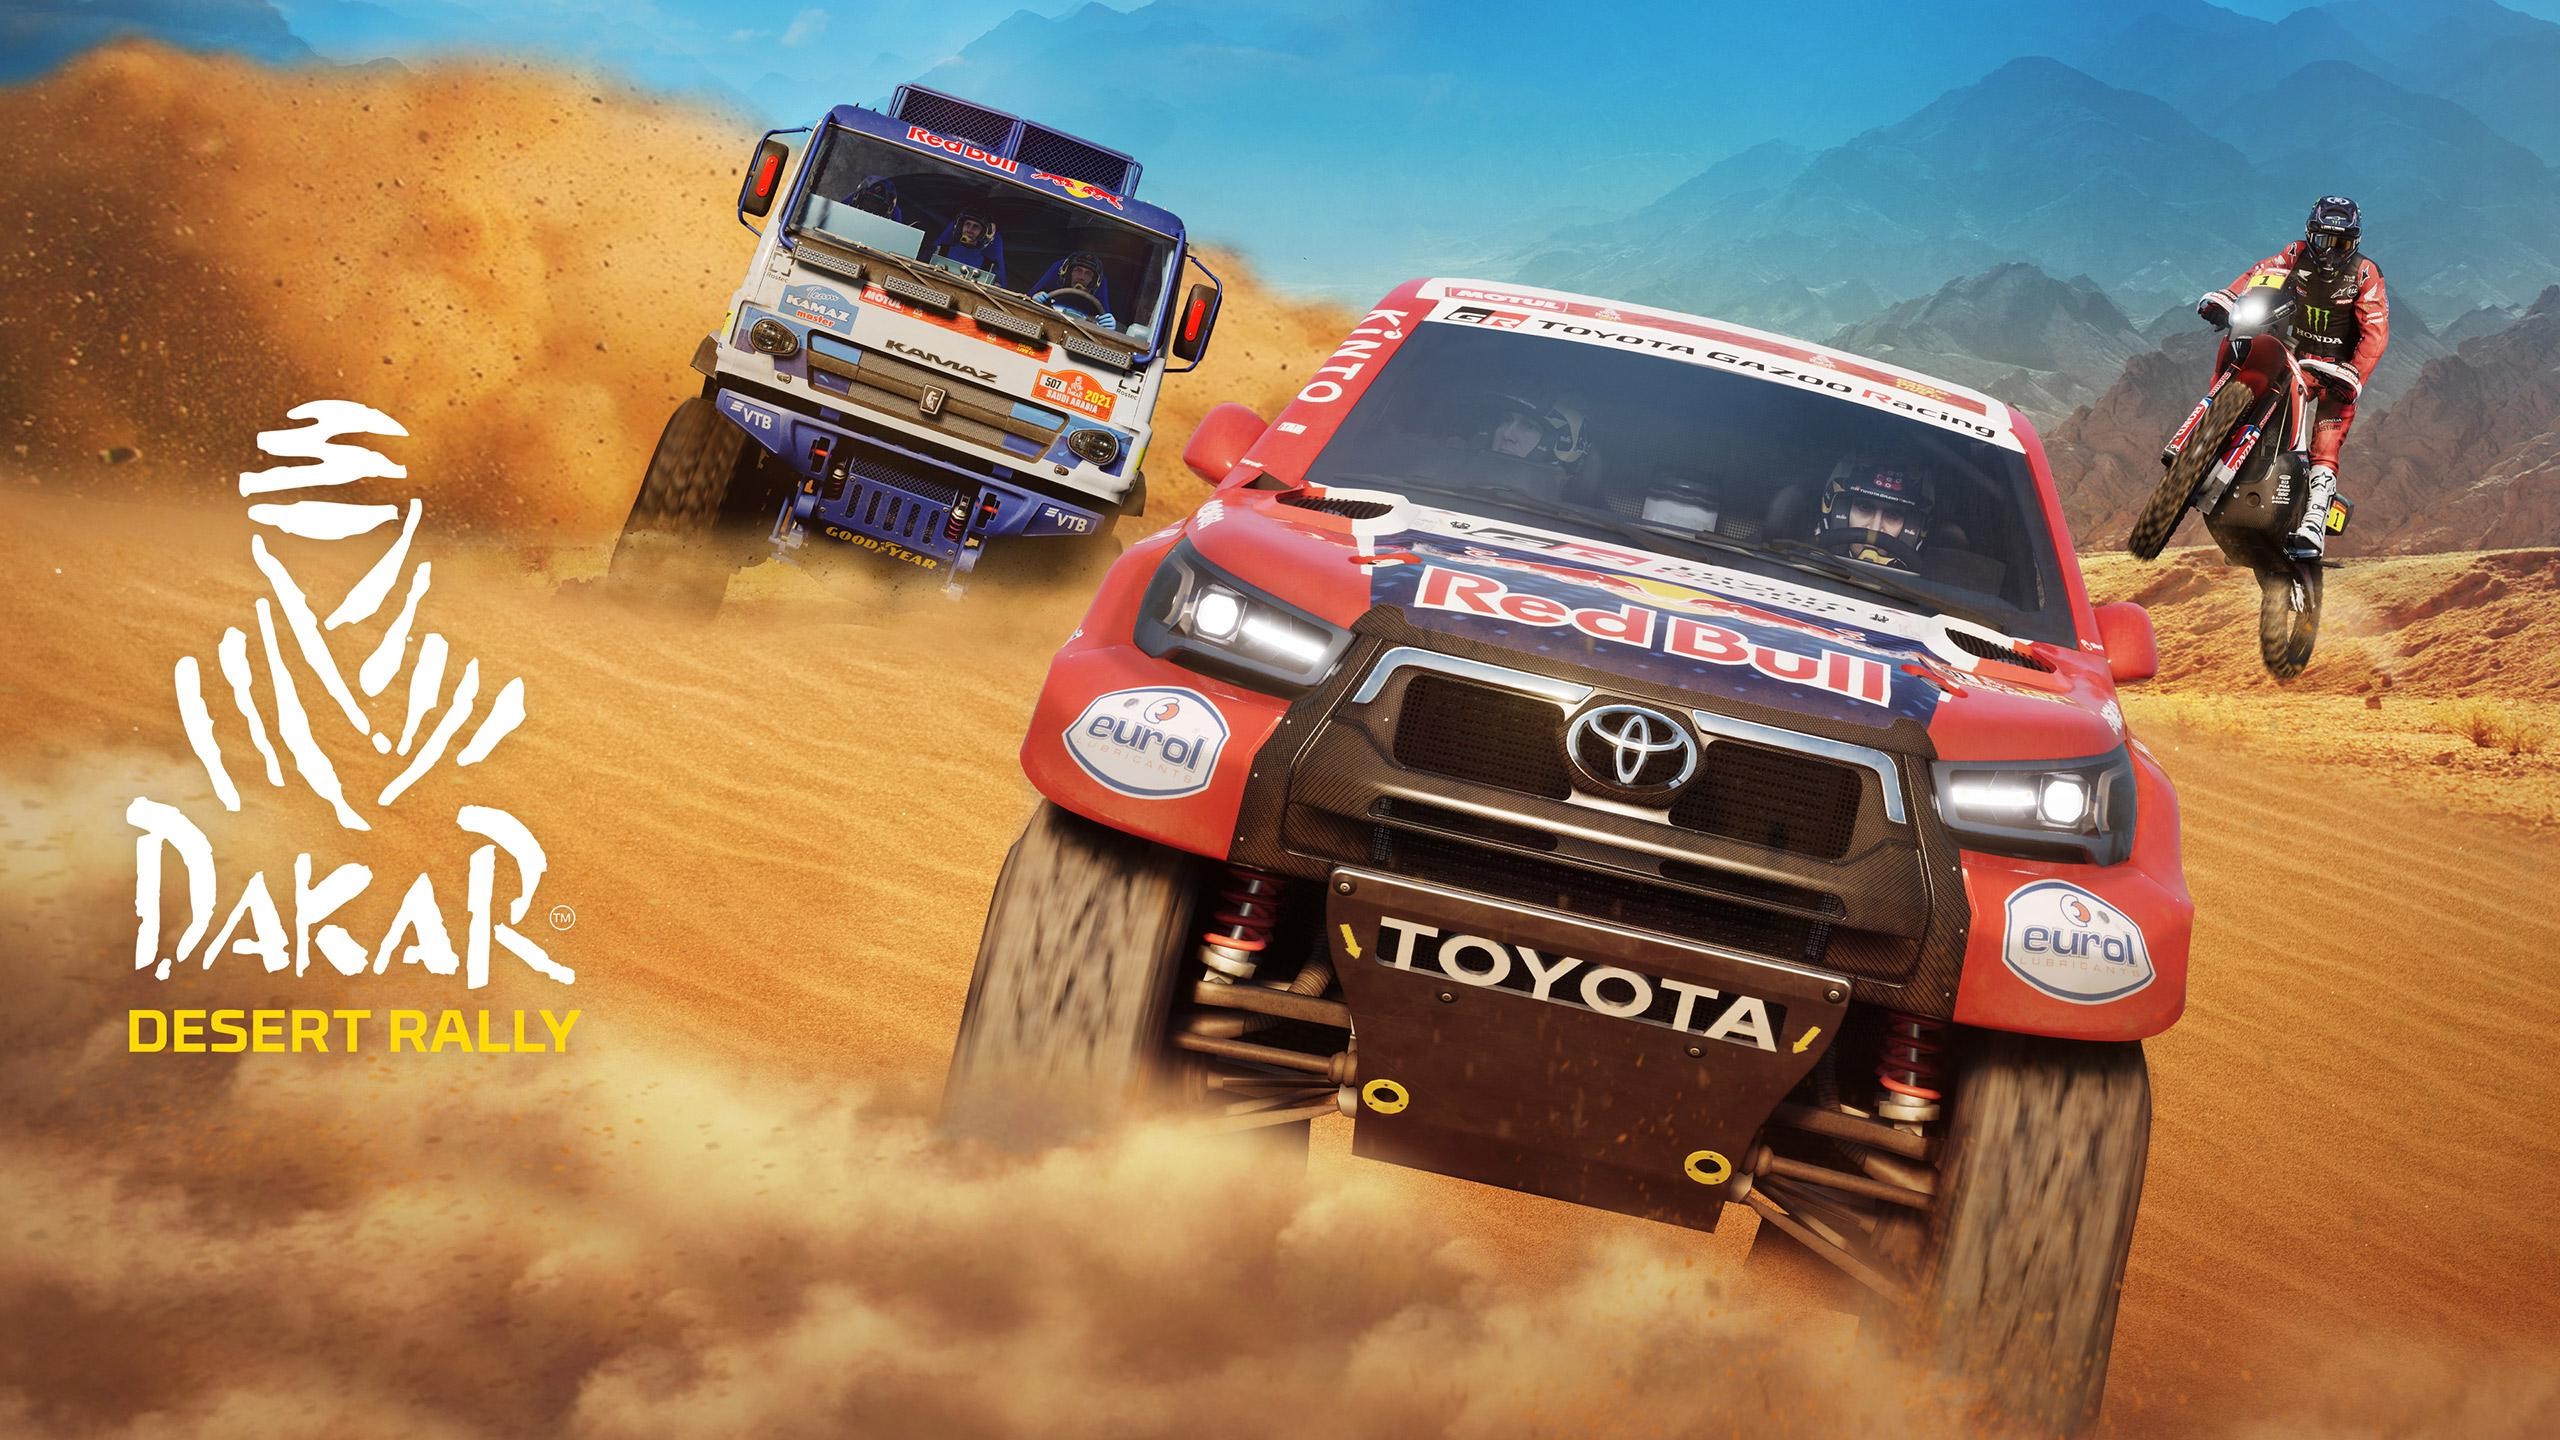 In the 2012 Dakar Desert Rally it is set to take place on Monday Dakar Desert Rally